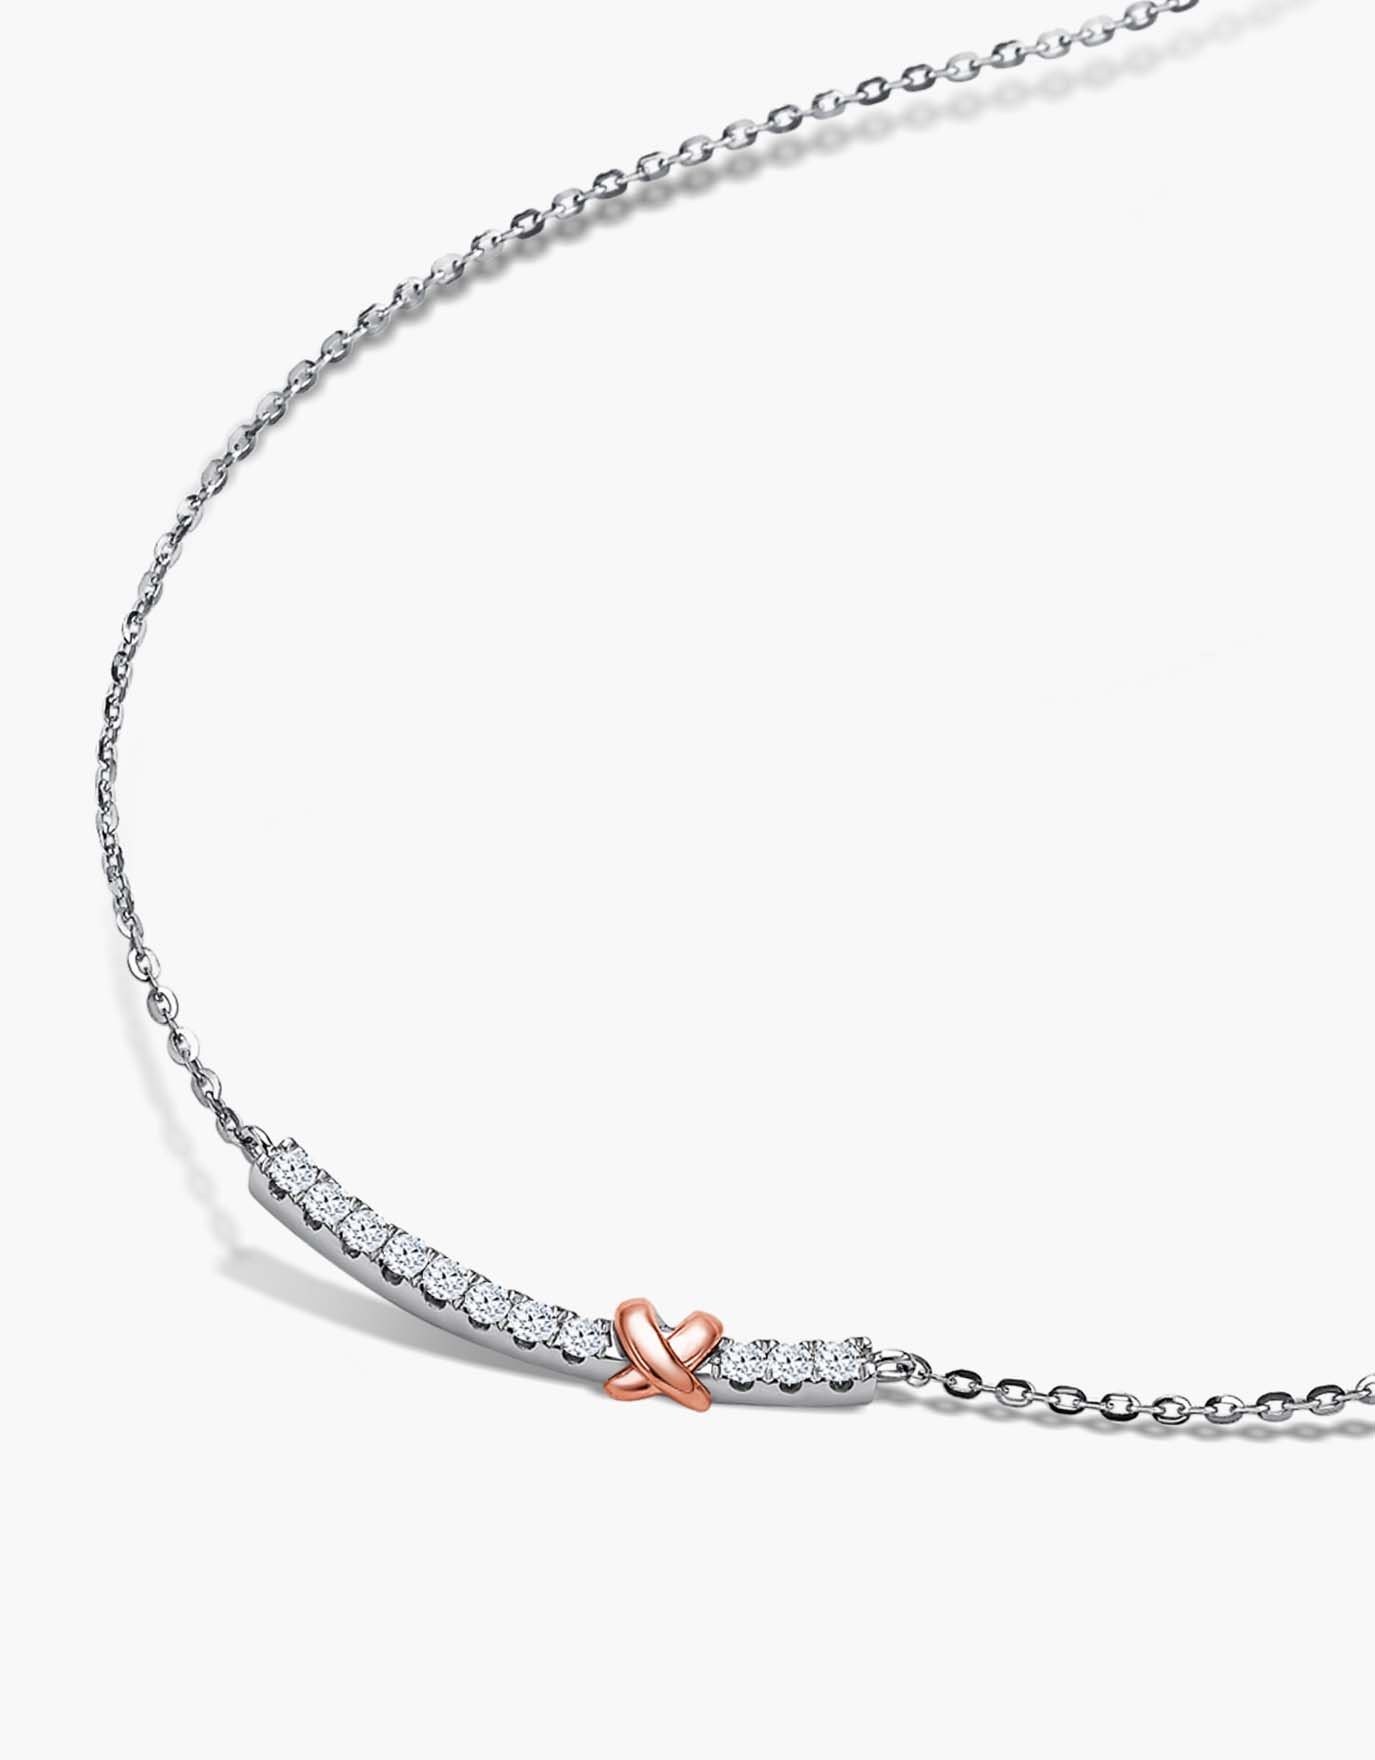 LVC Eterno Noeud Diamond Necklace